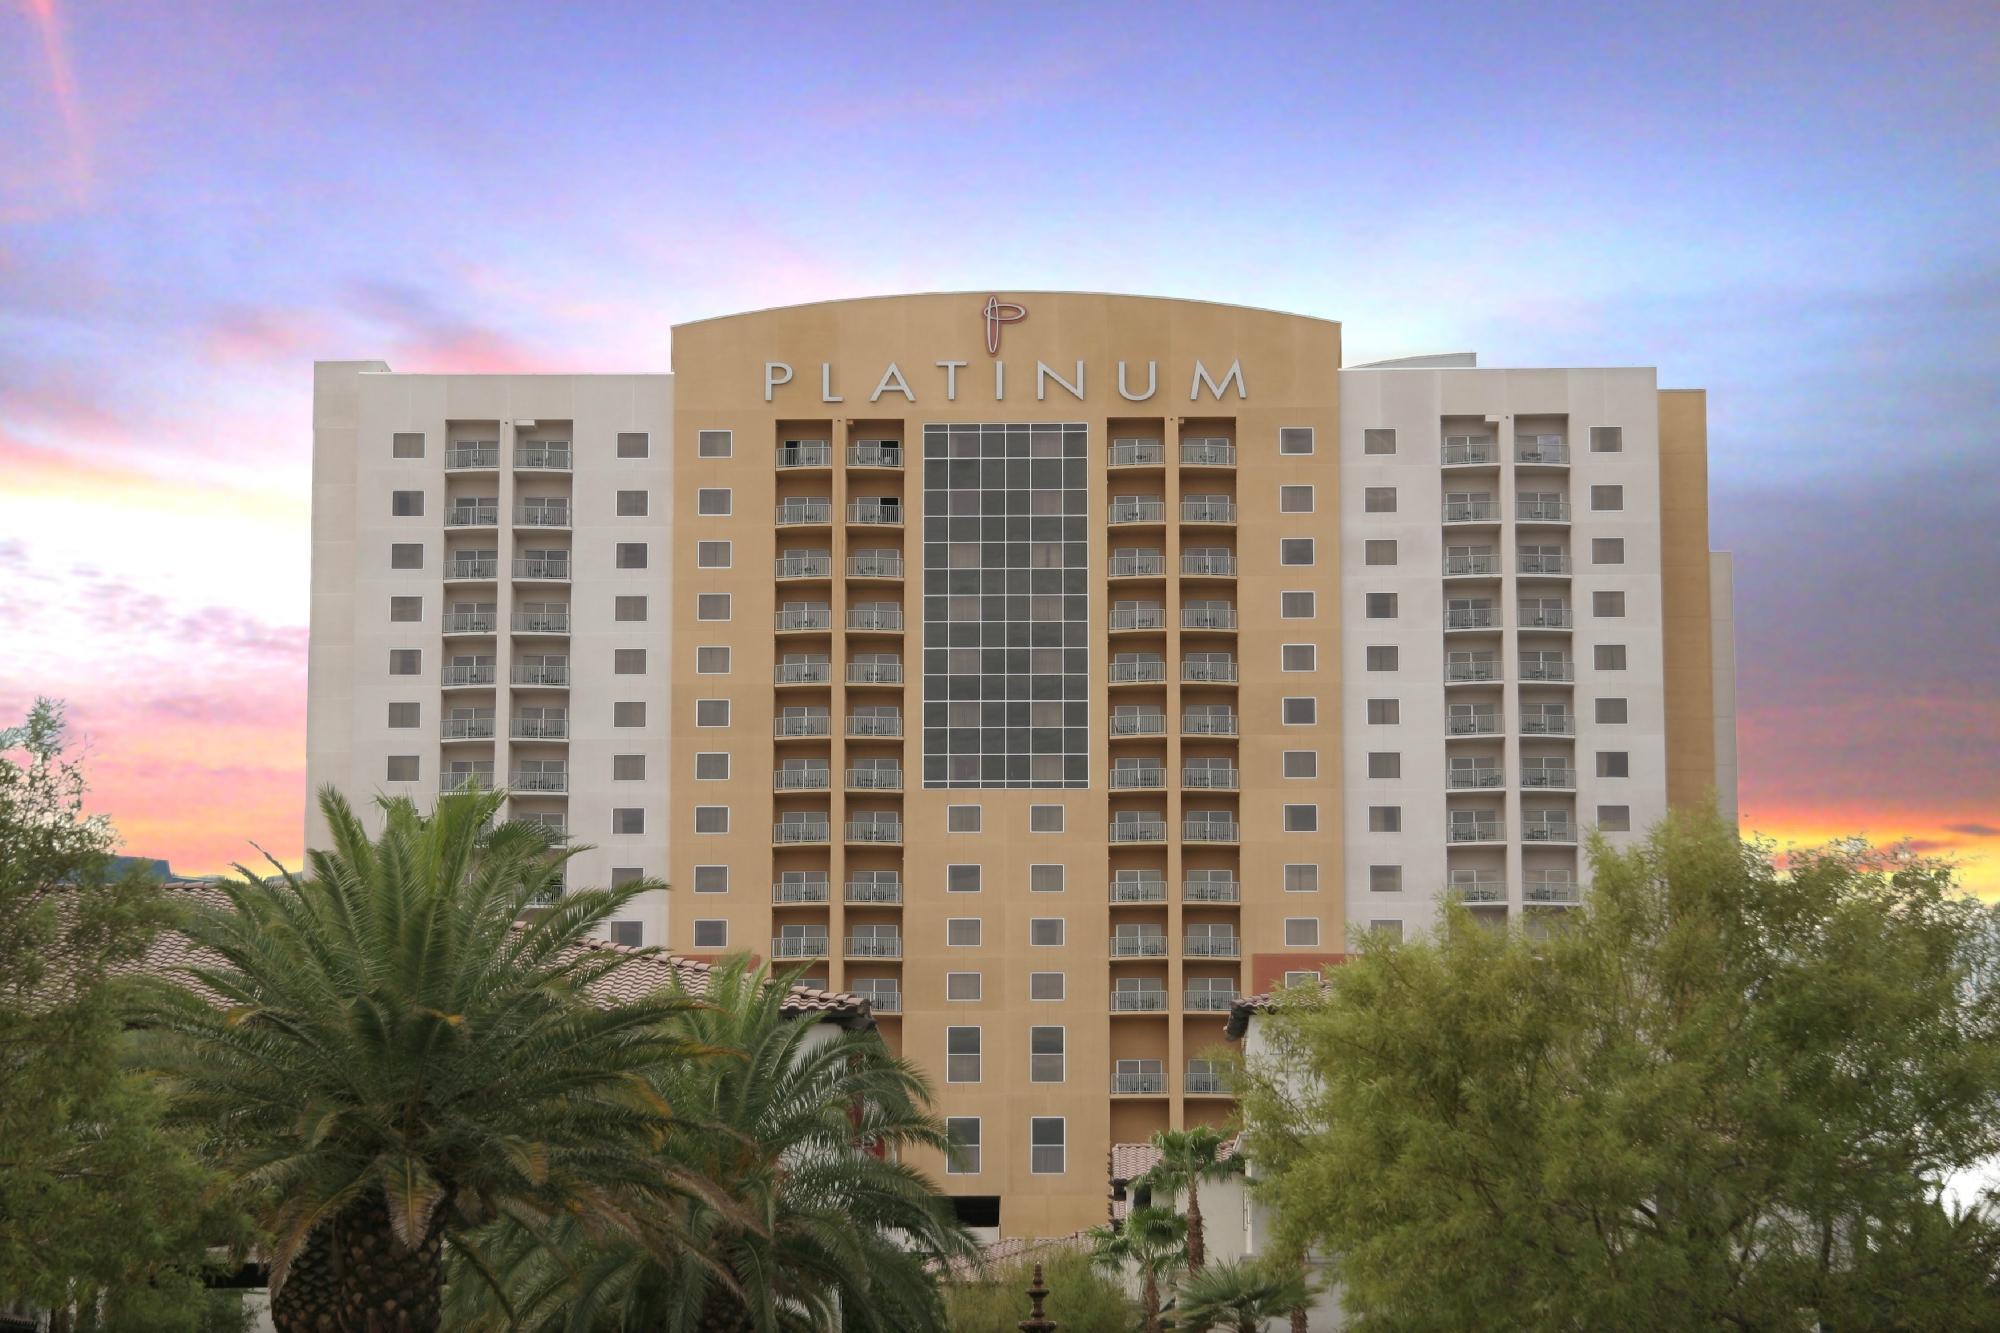 Photo of Platinum Hotel & Spa, Las Vegas, NV